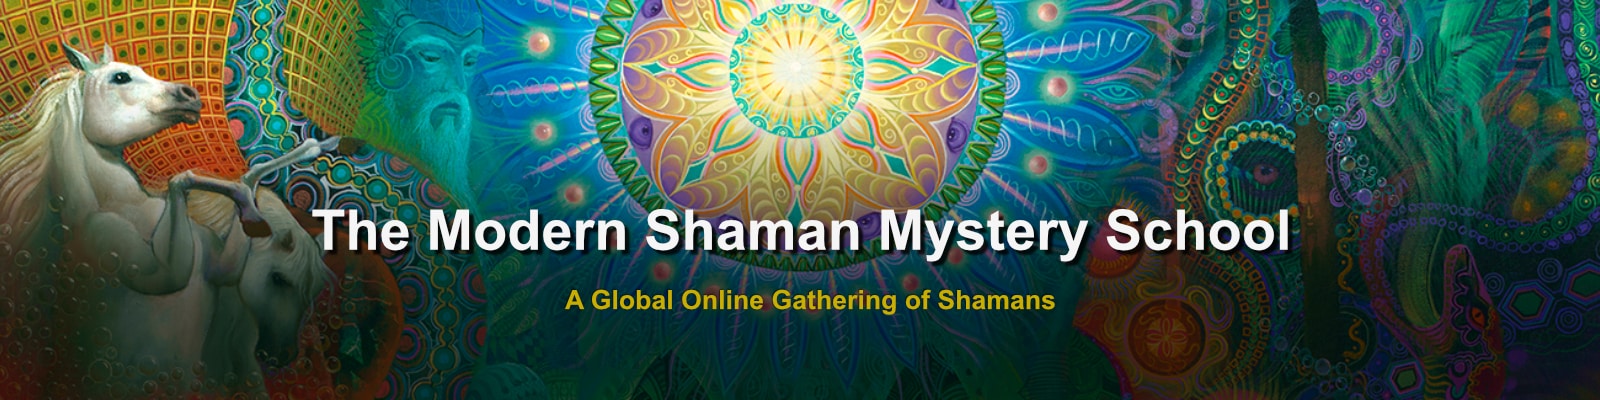 The Modern Shaman Summit9